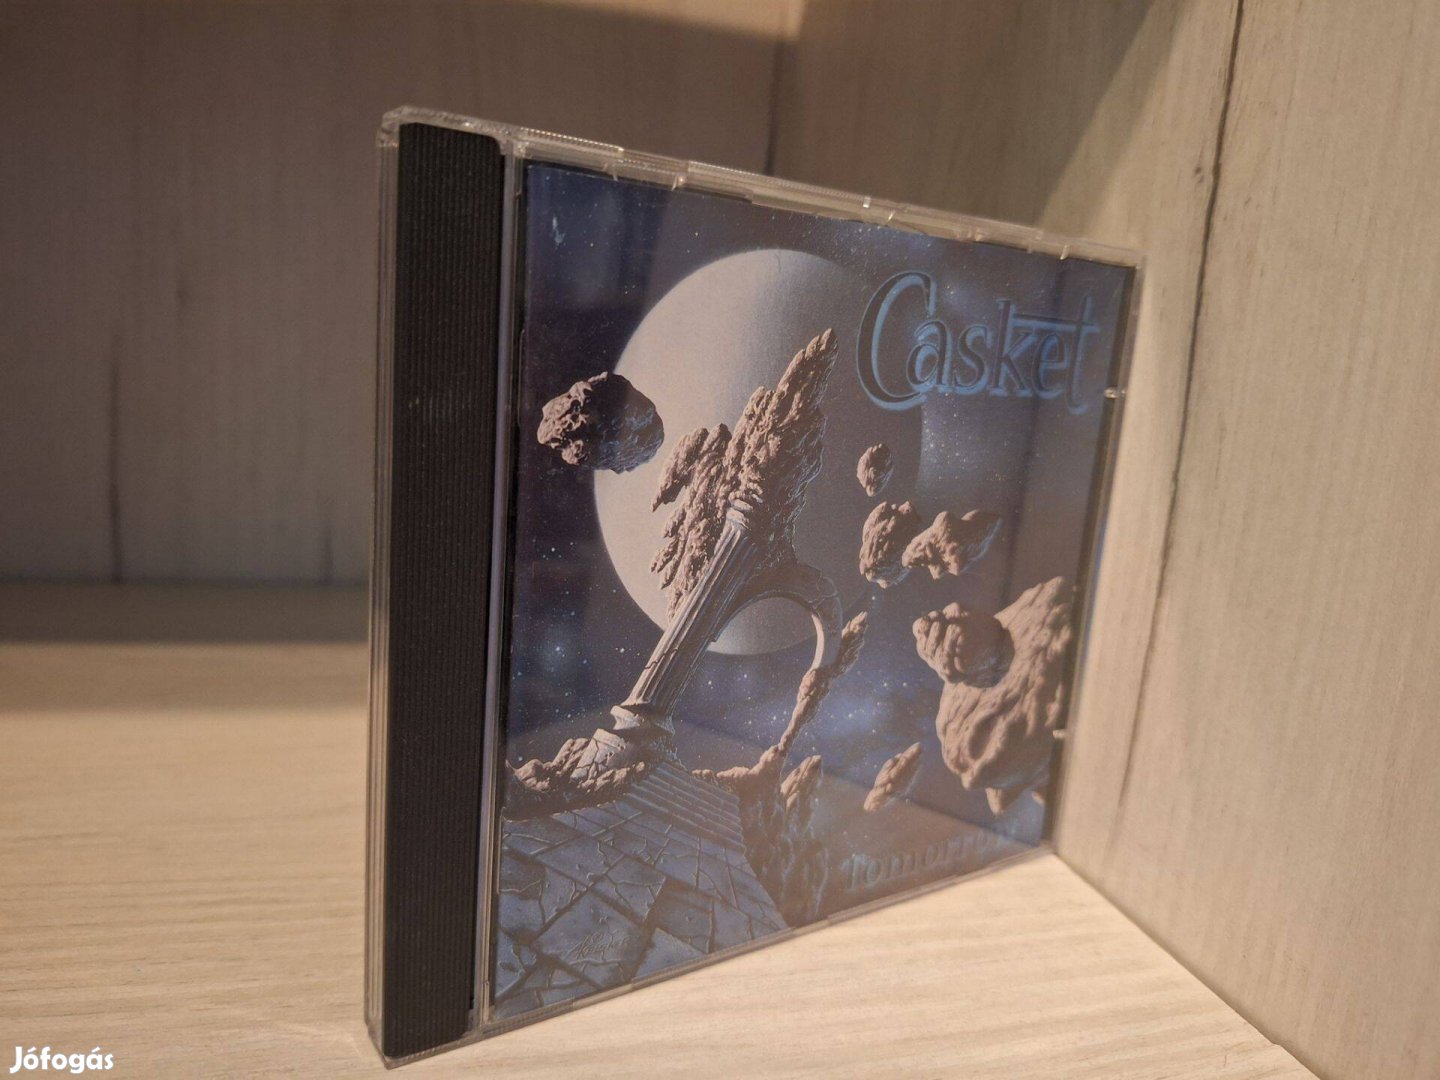 Casket - Tomorrow CD